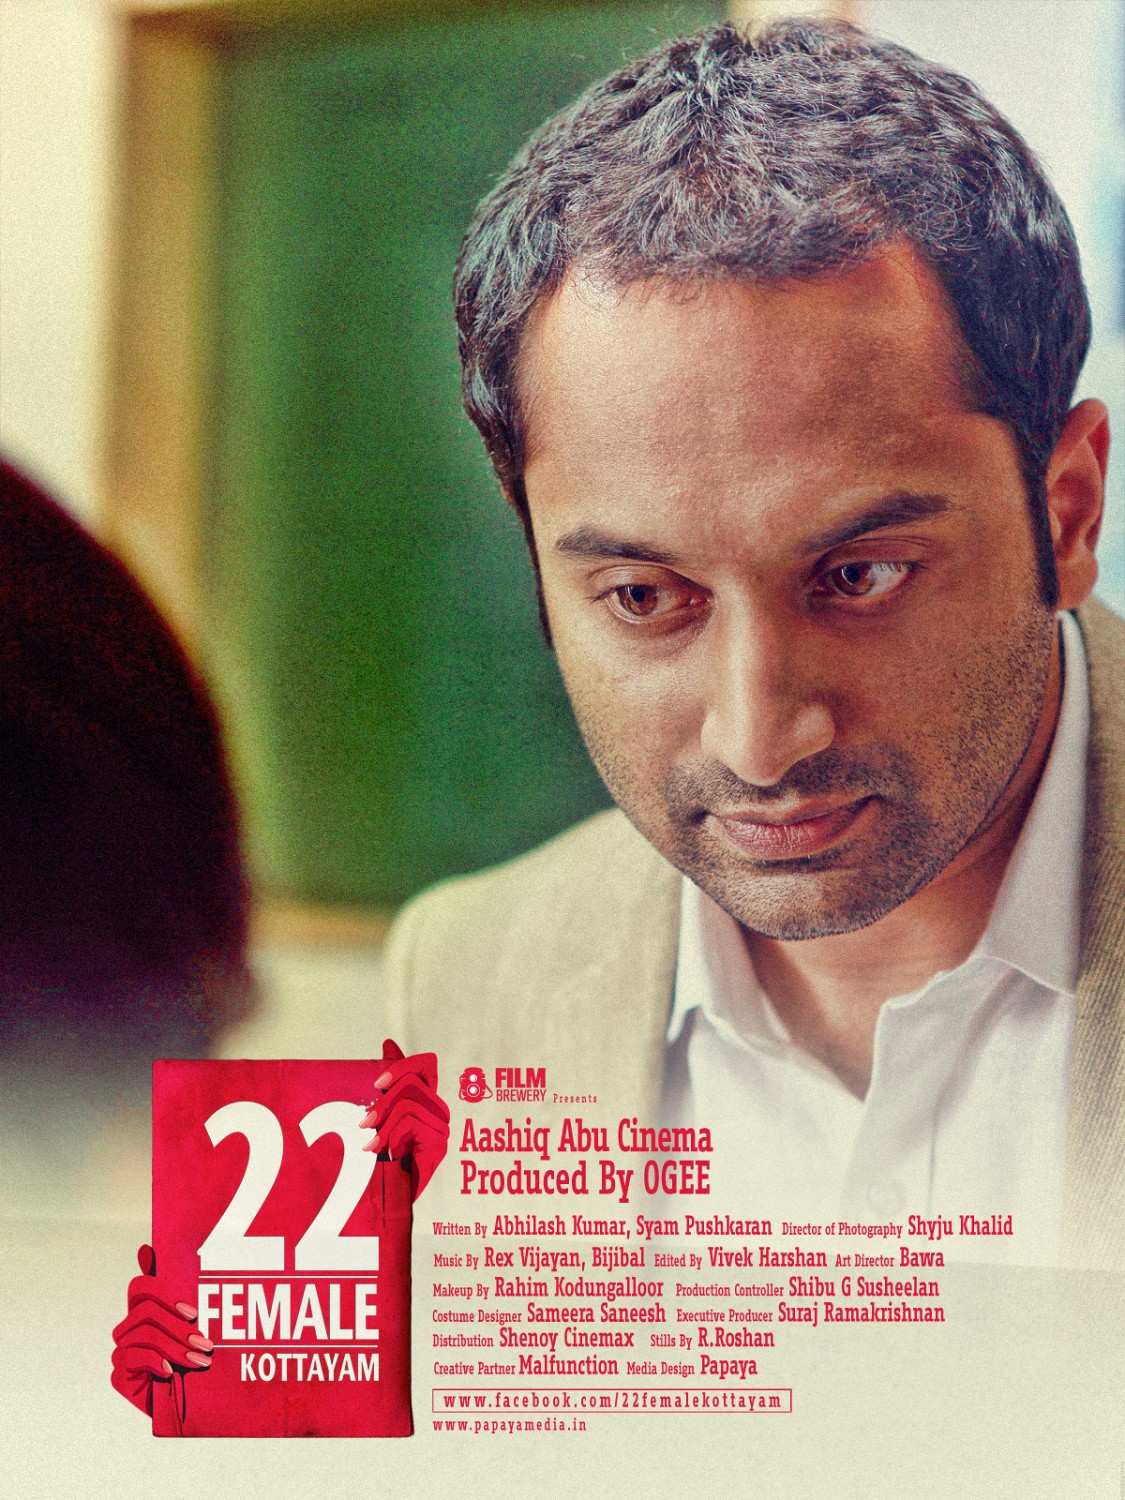 Extra Large Movie Poster Image for 22 Female Kottayam (#25 of 28)